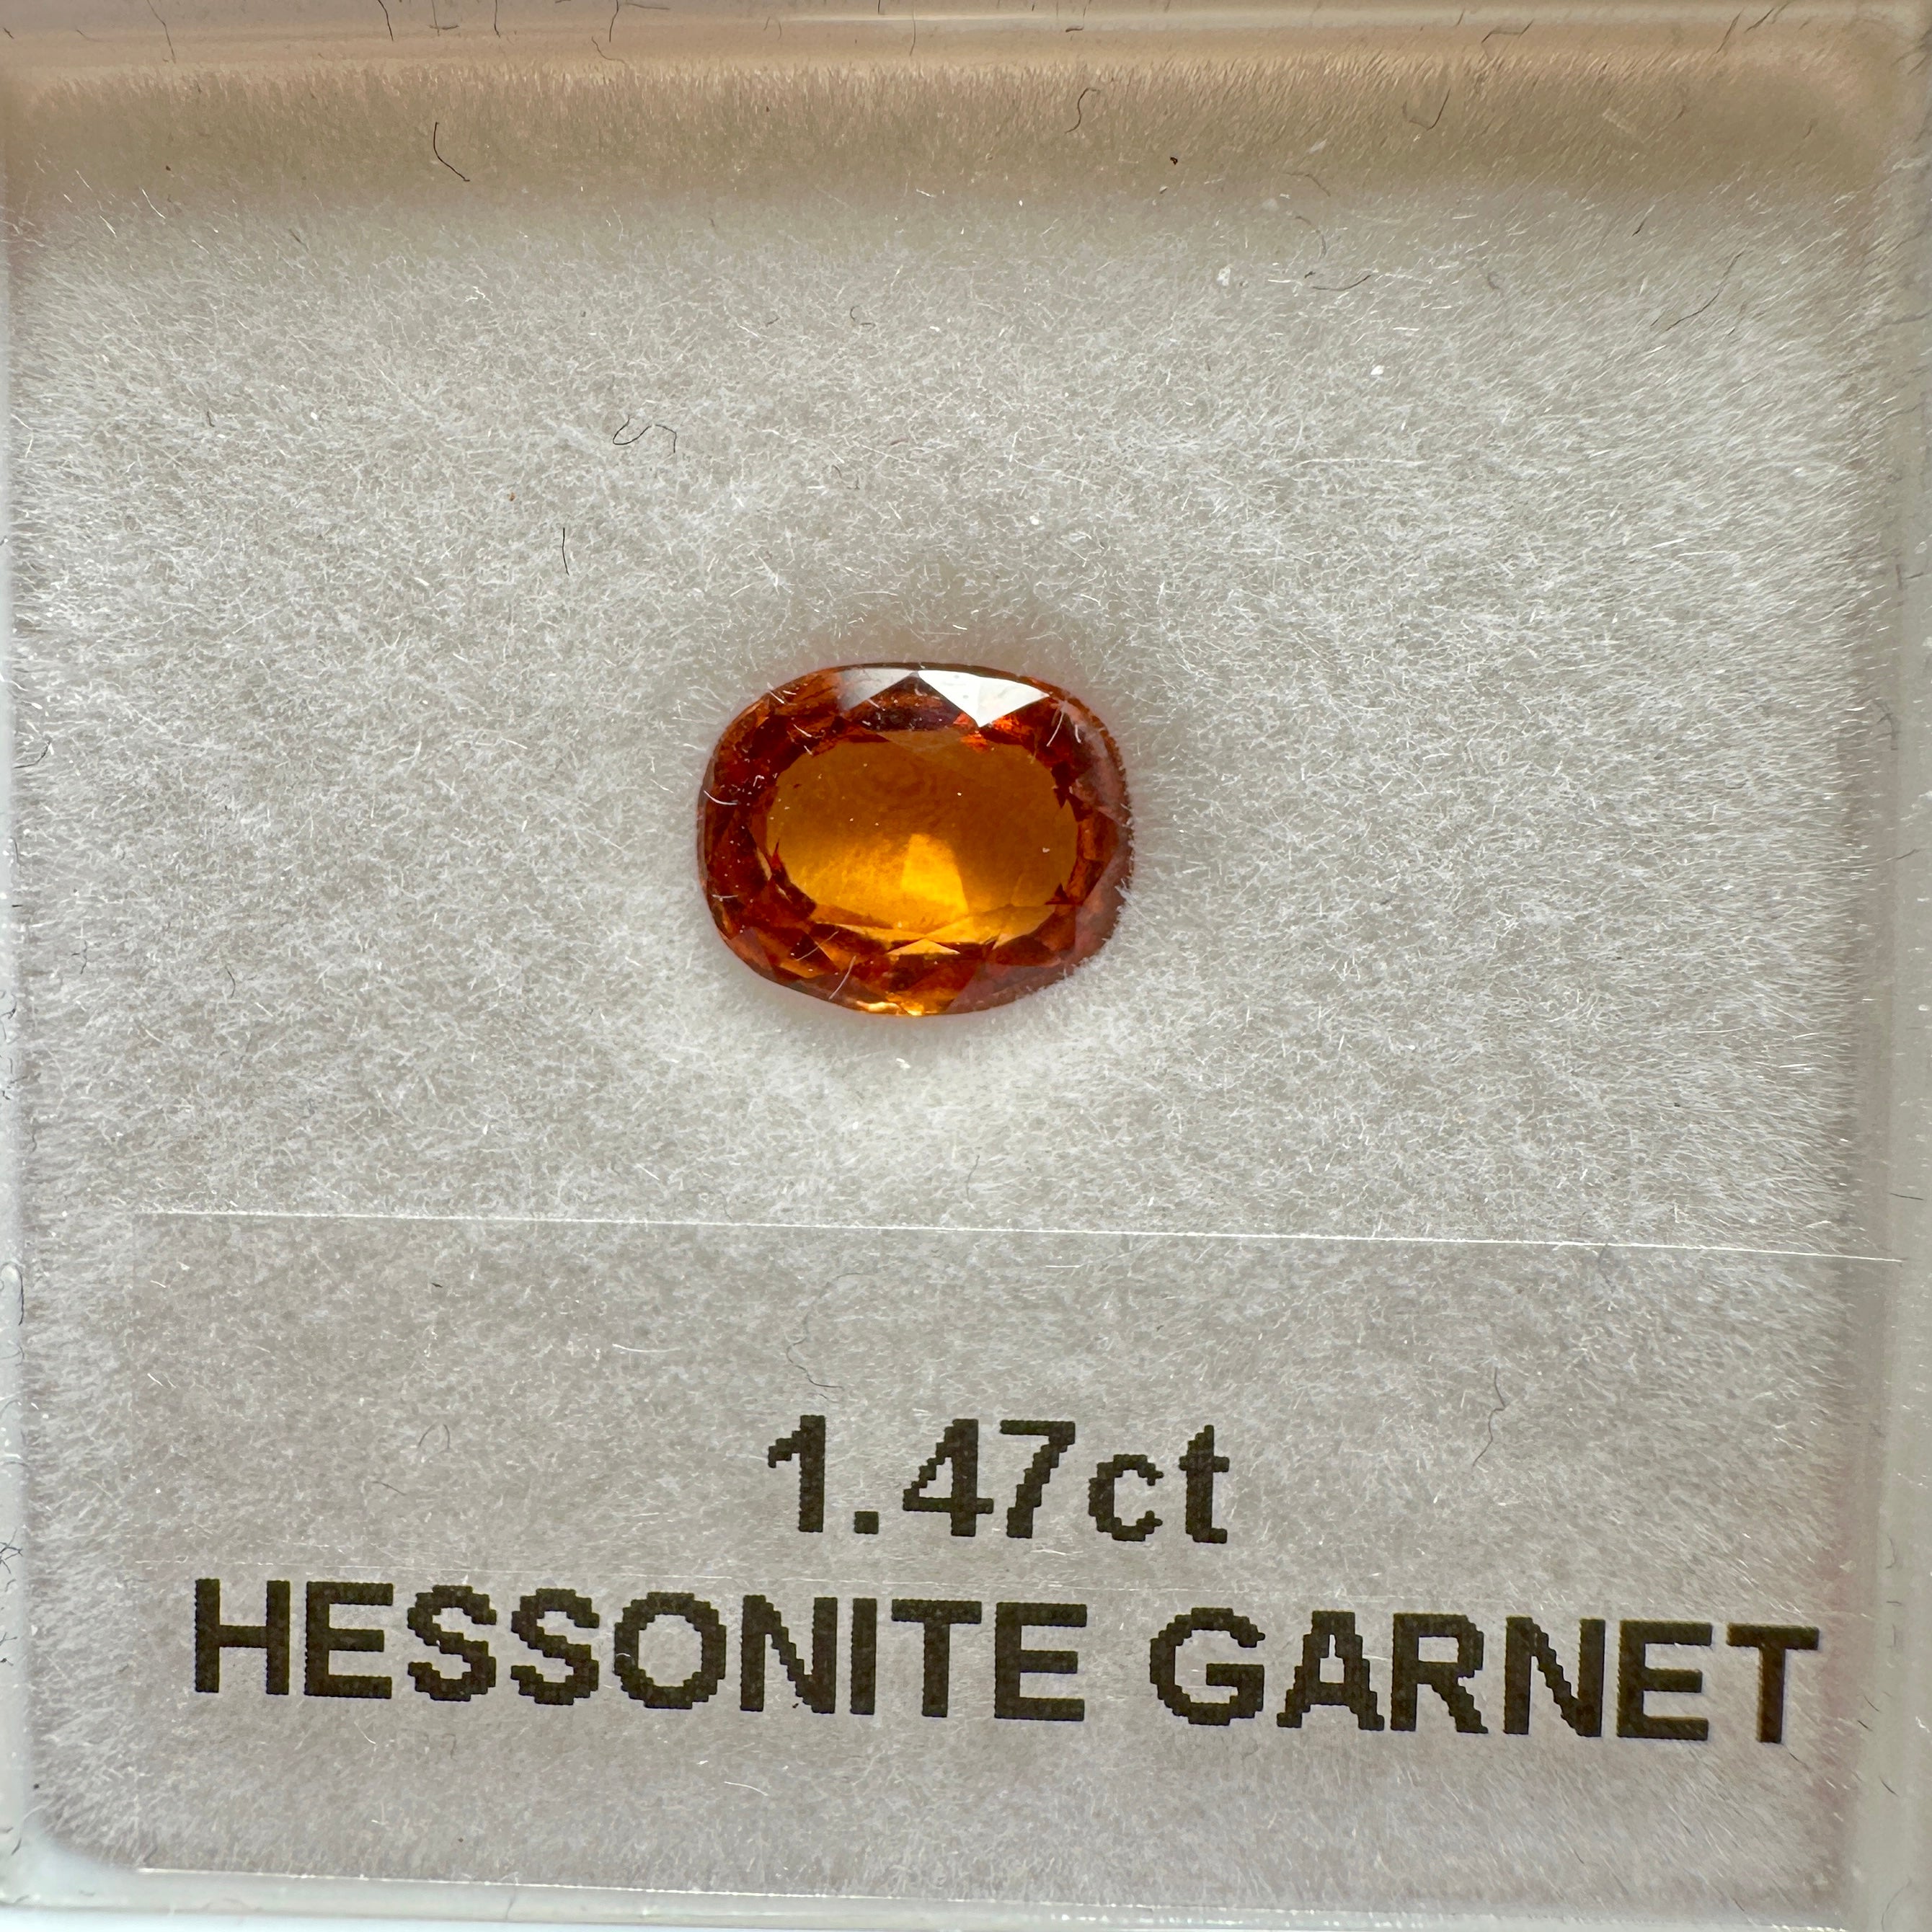 1.47ct Hessonite Garnet, Untreated Unheated, native cut